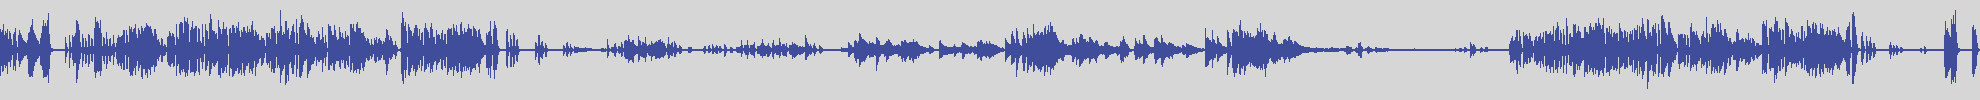 big_music_classic [BMC006] Claude Debussy, Corrado Rossi - Golliwogg's Cakewalk [] audio wave form